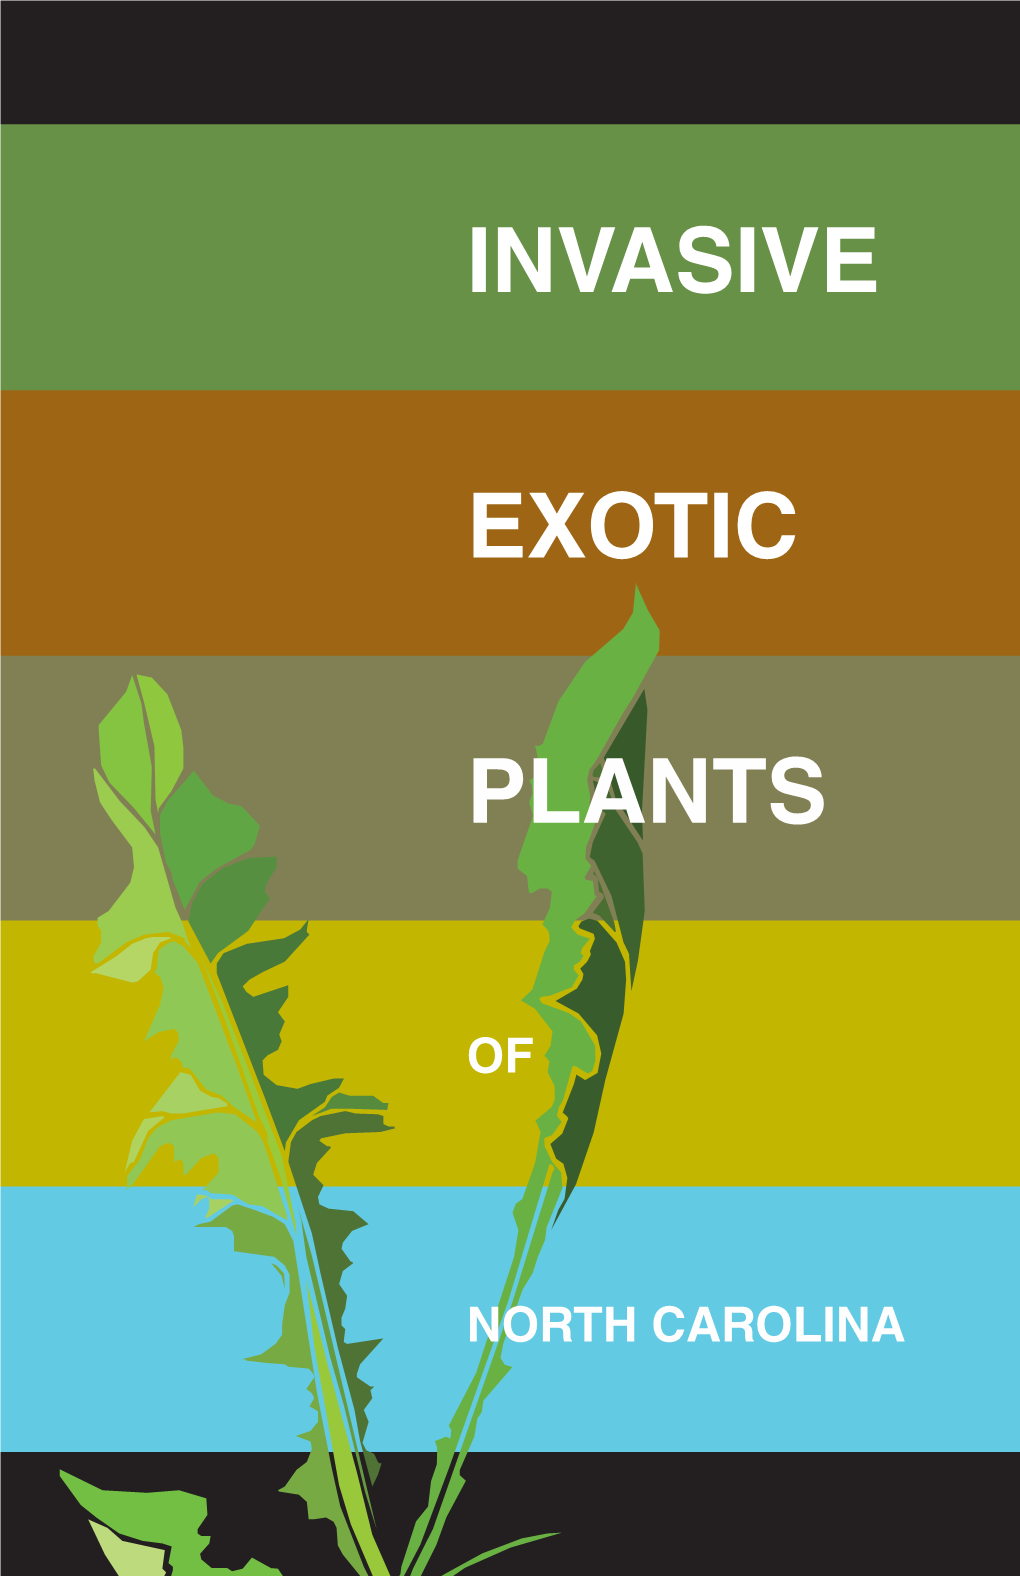 Invasive Exotic Plants of North Carolina